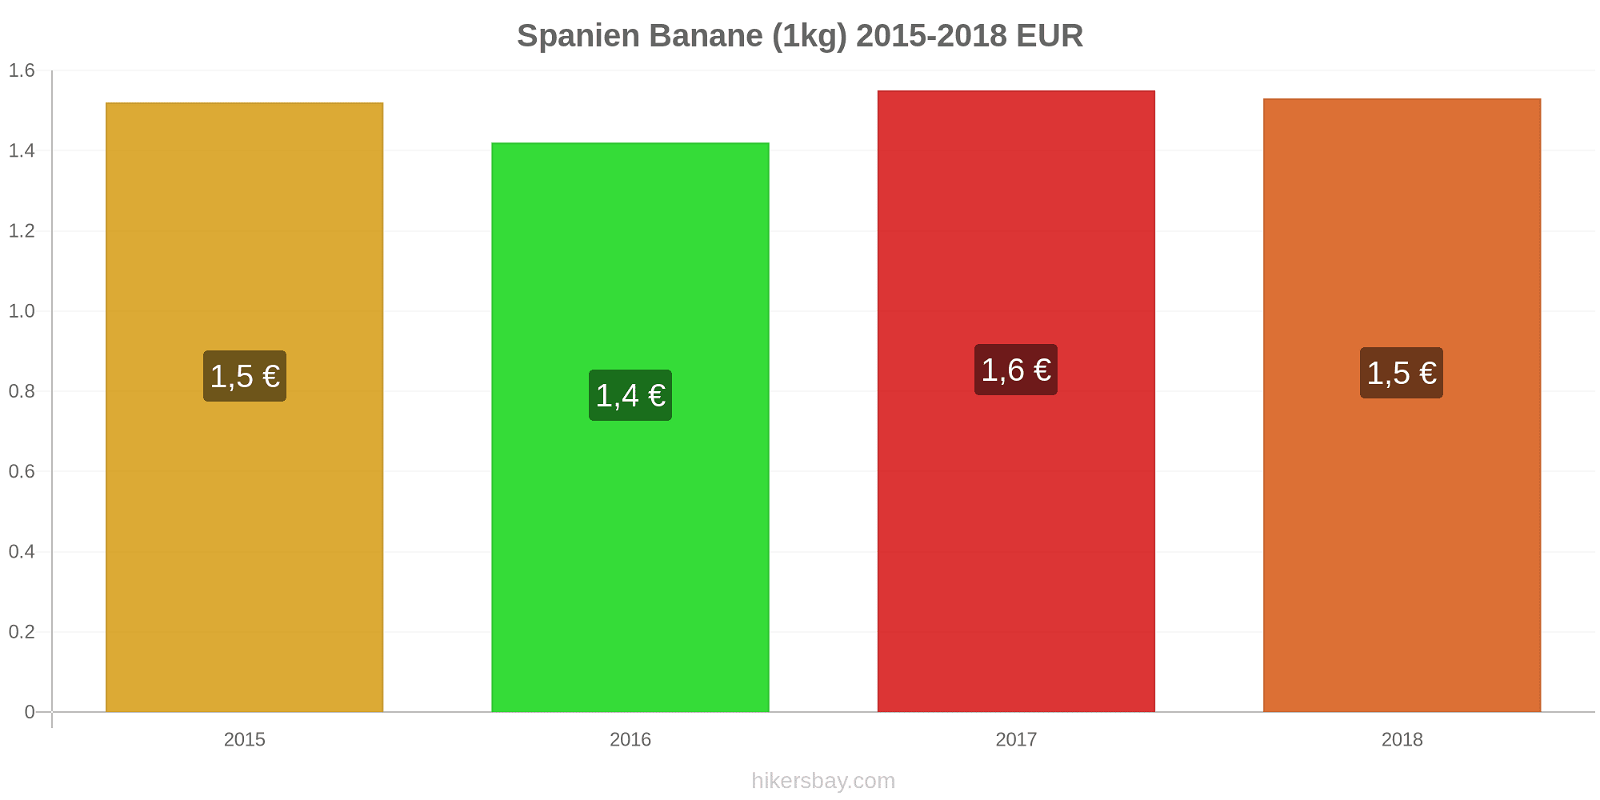 Spanien Preisänderungen Bananen (1kg) hikersbay.com